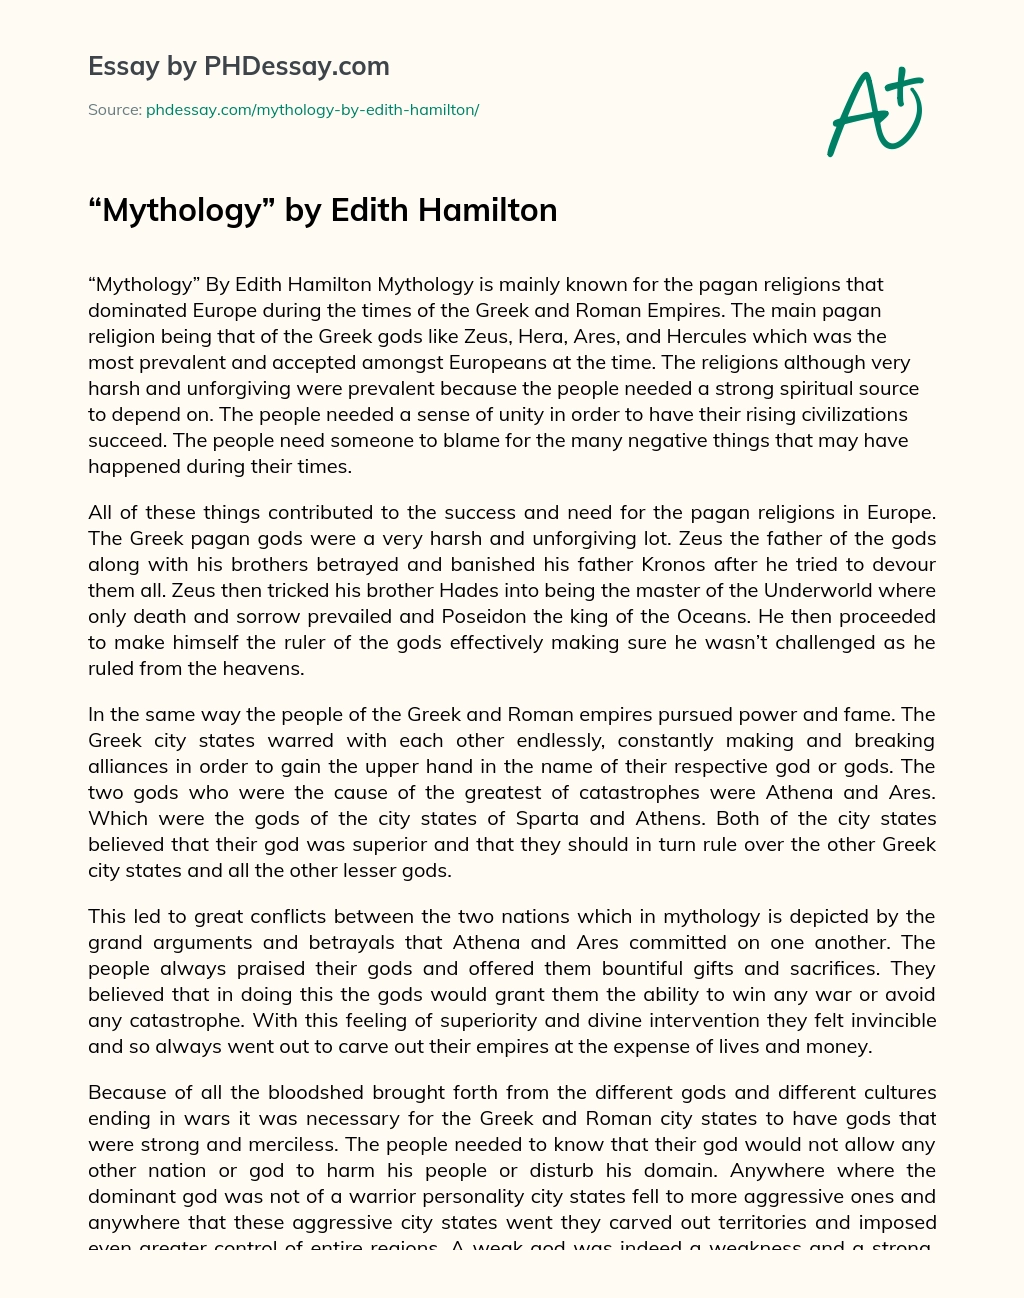 Mythology by Edith Hamilton essay